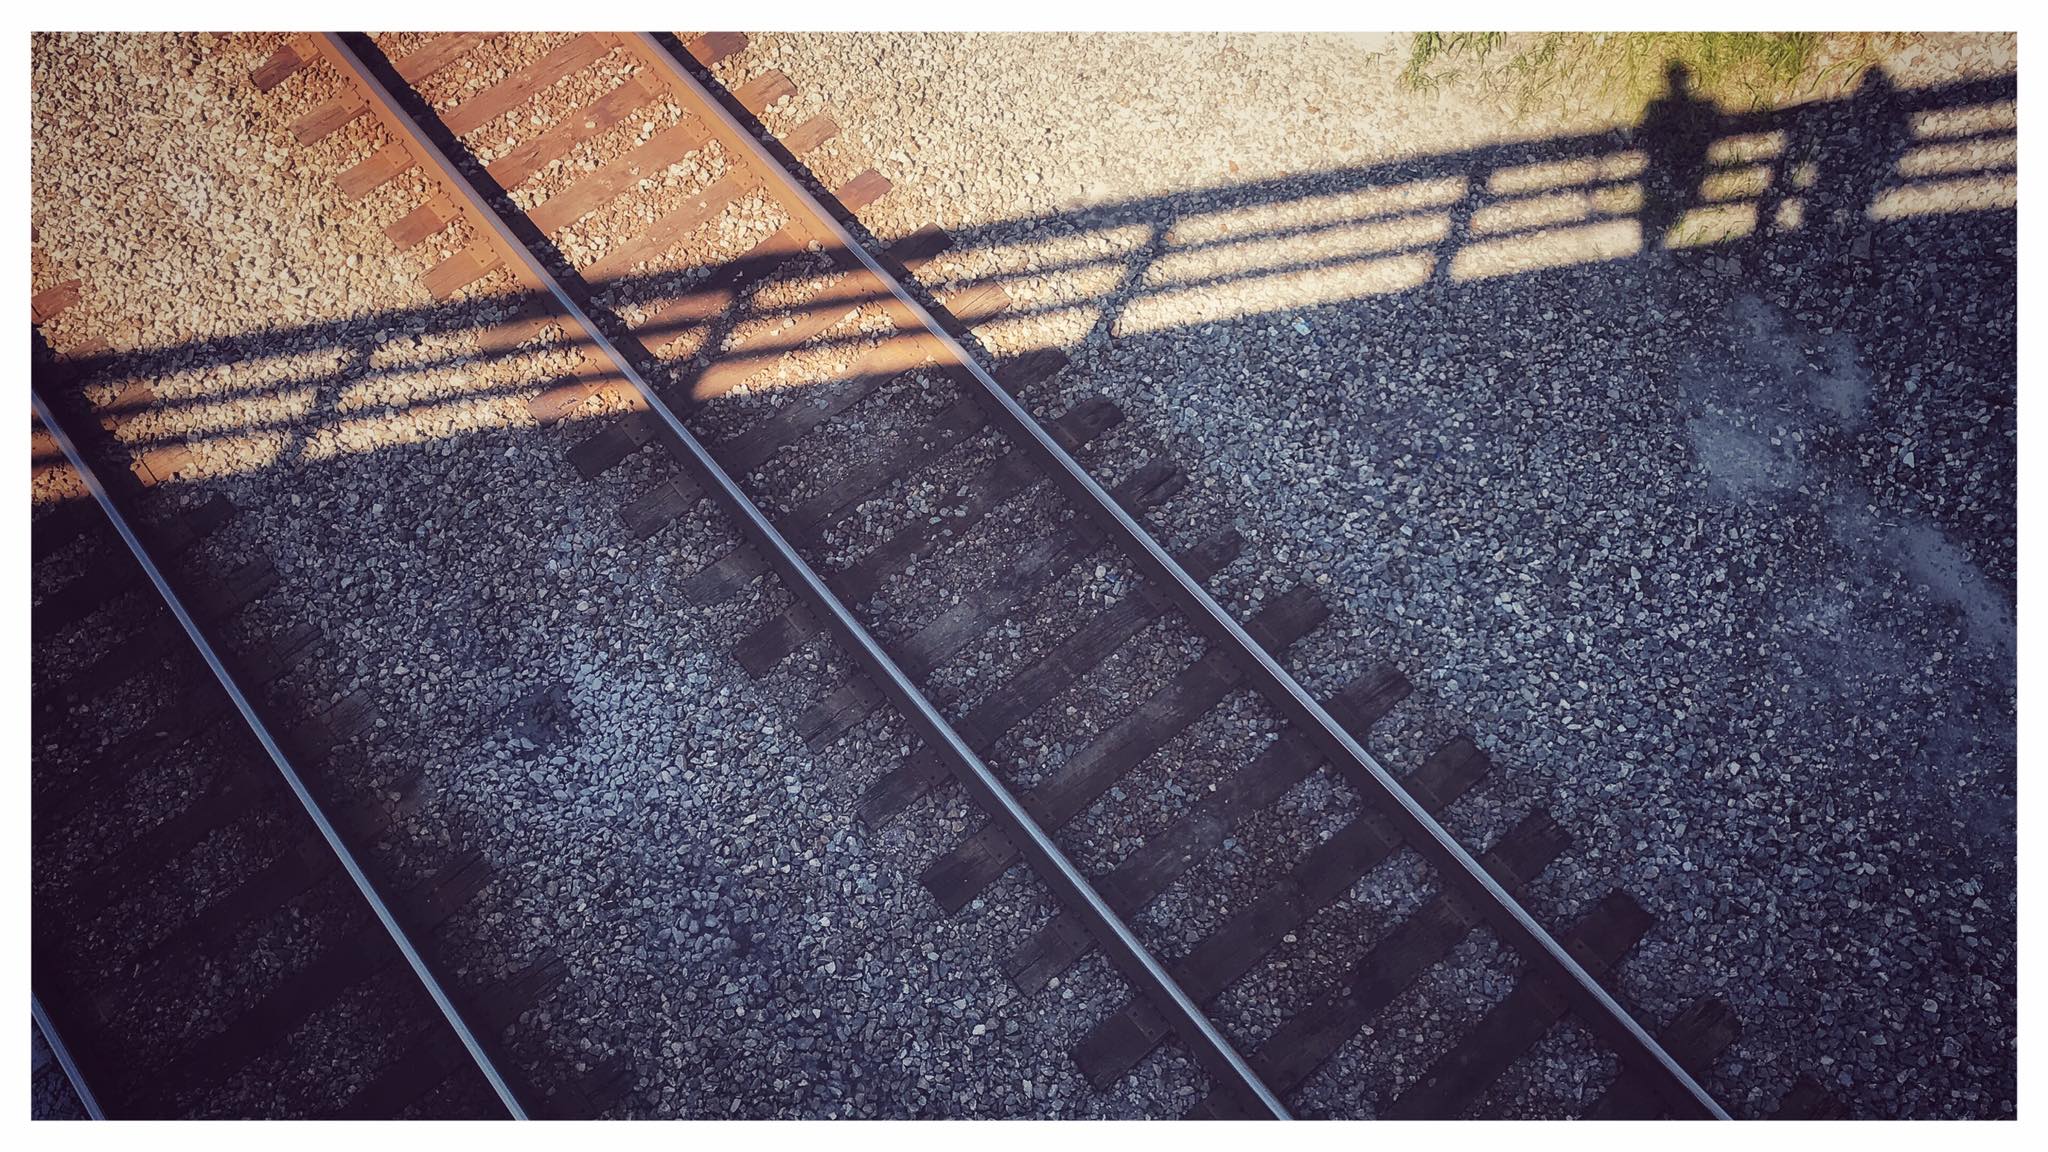 August 10, 2019 - Fellow railfan Ryan Scott and I cast shadows as we wait on a train north of Danville, Kentucky.